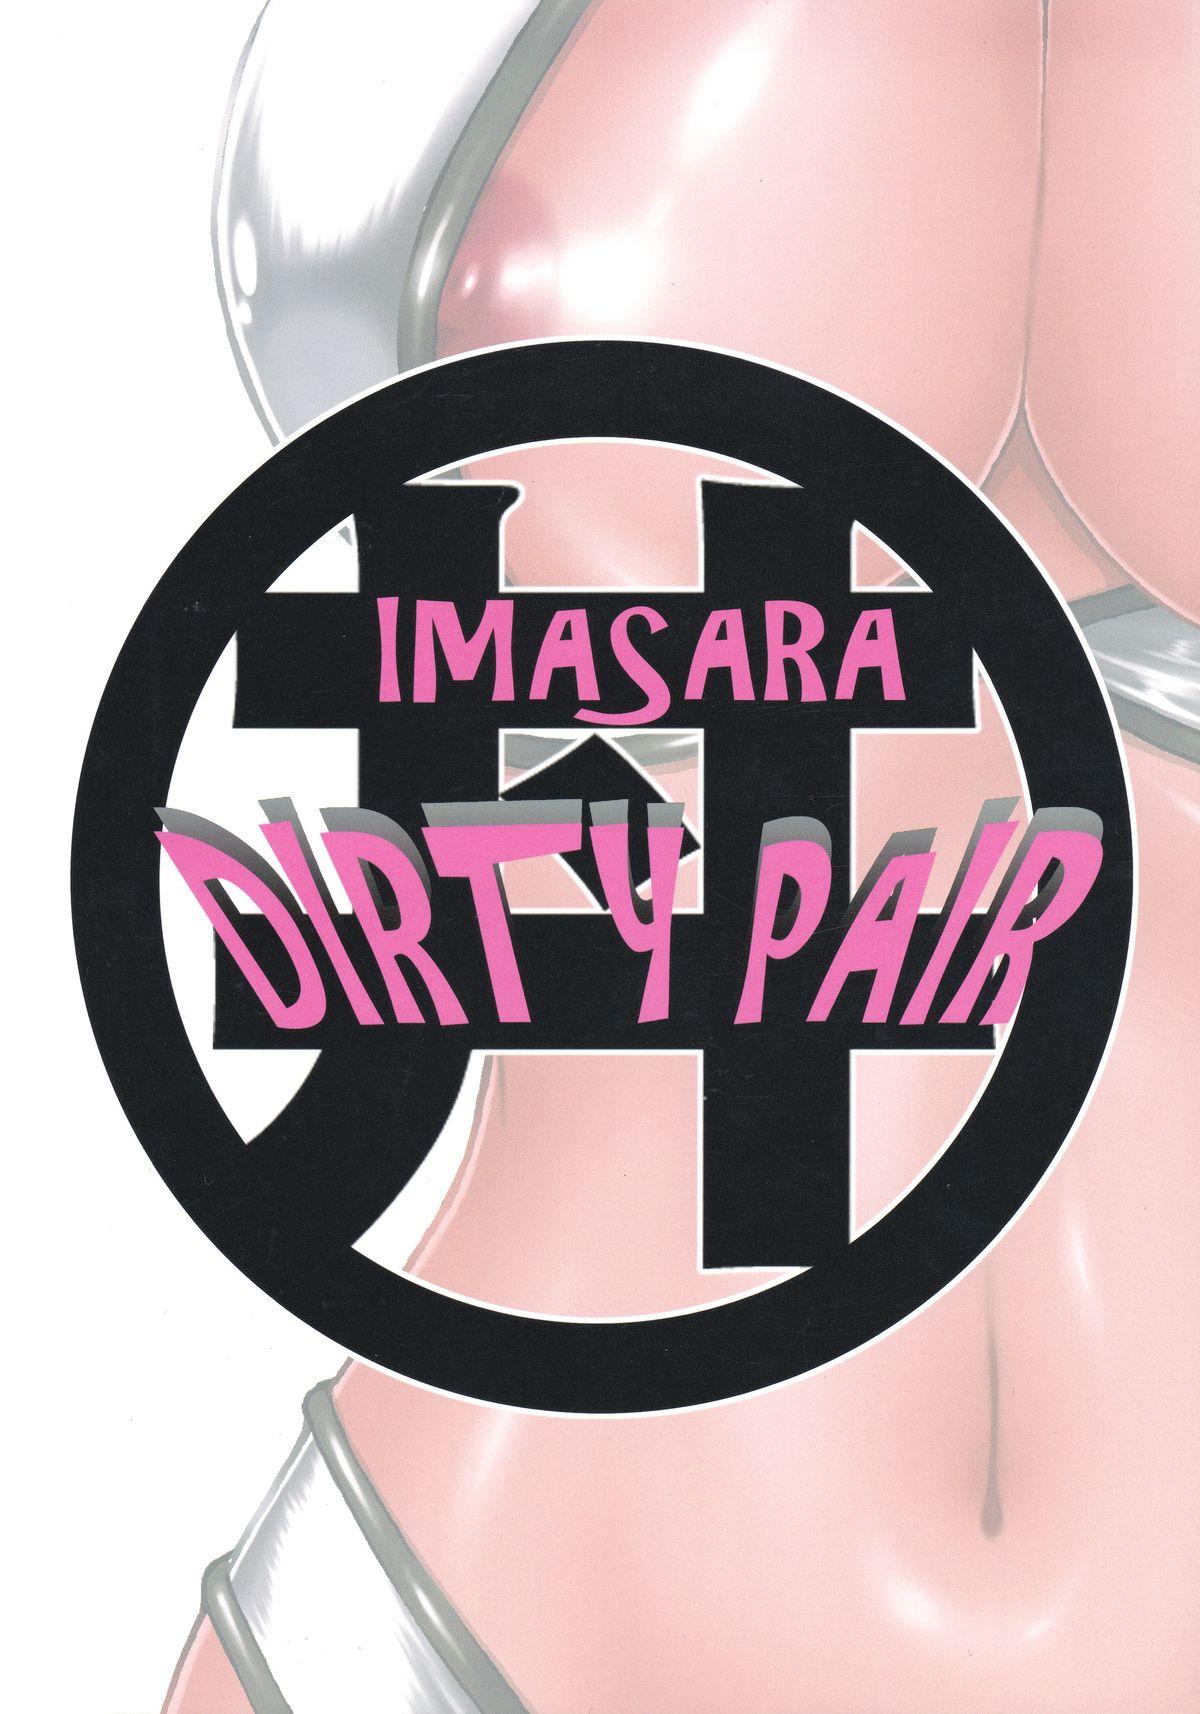 IMASARA Dirty Pair 2013 21